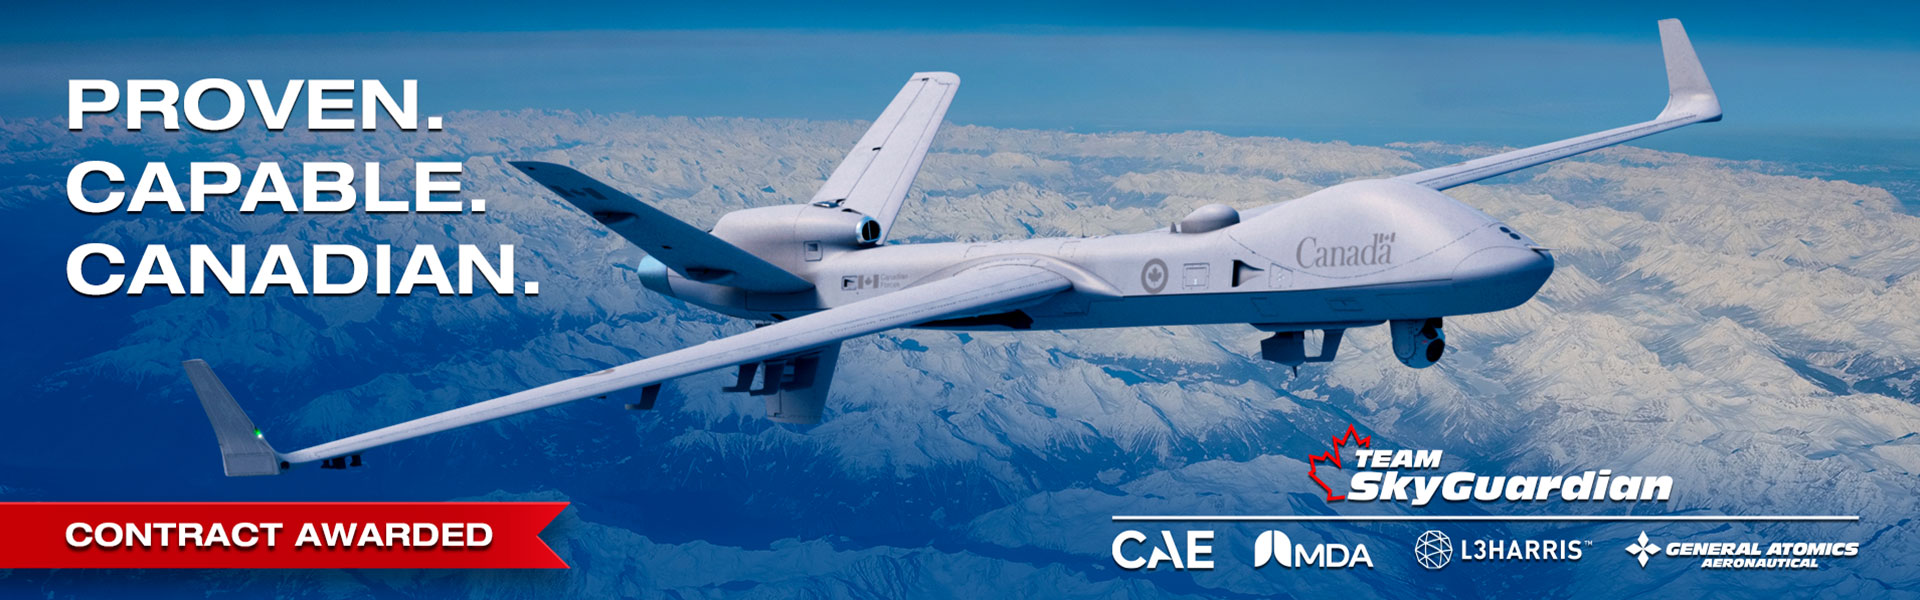 General Atomics Aeronautical - Team SkyGuardian Canada